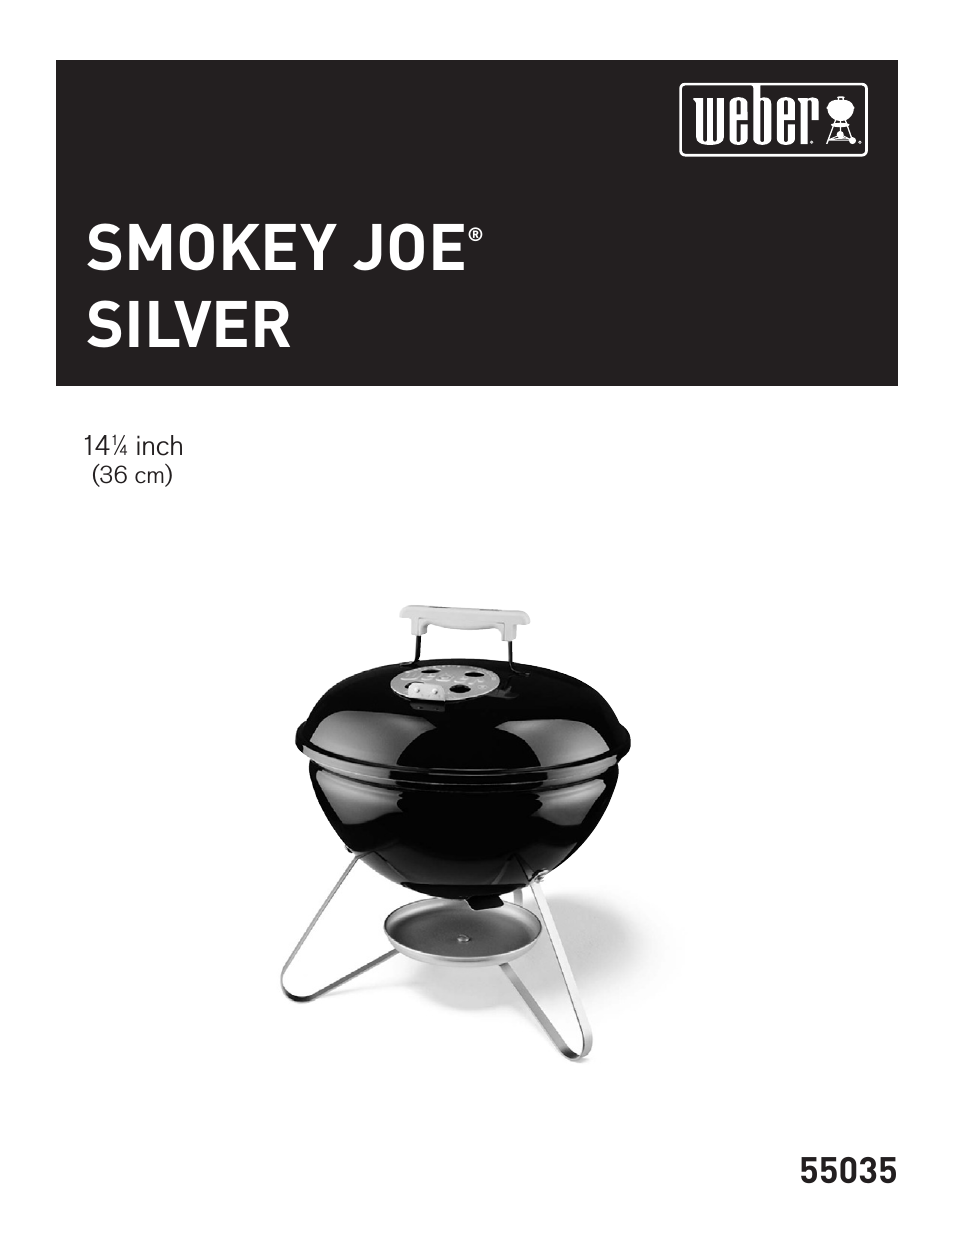 Smokey Joe Silver 55035